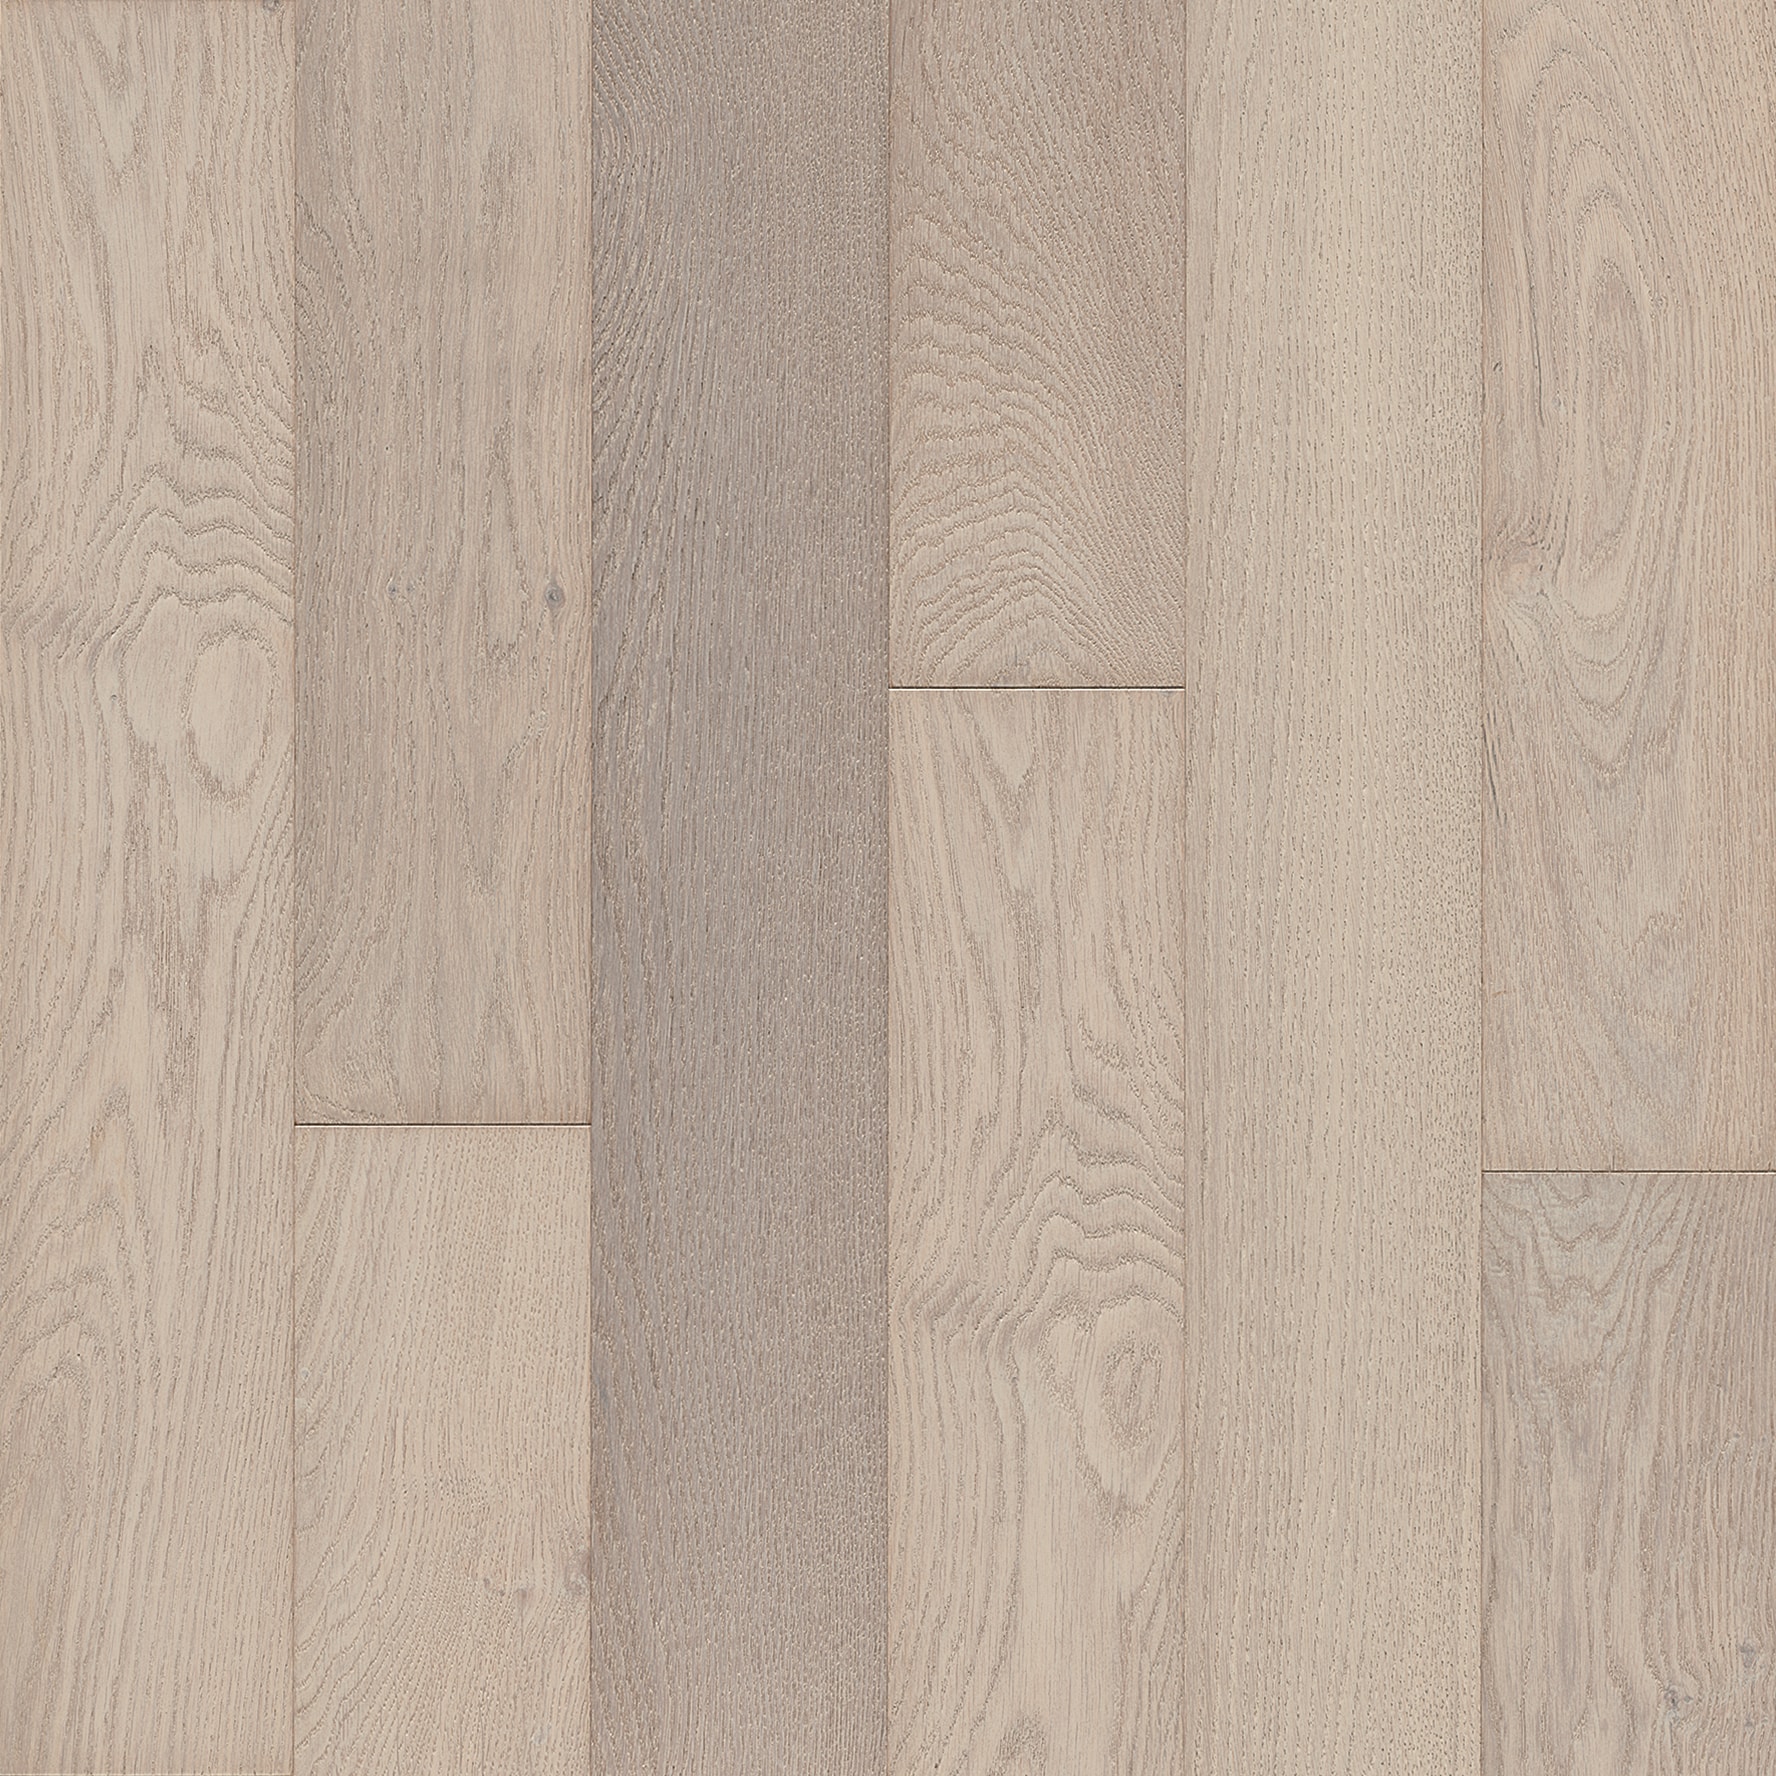 Parchment hardwood floor